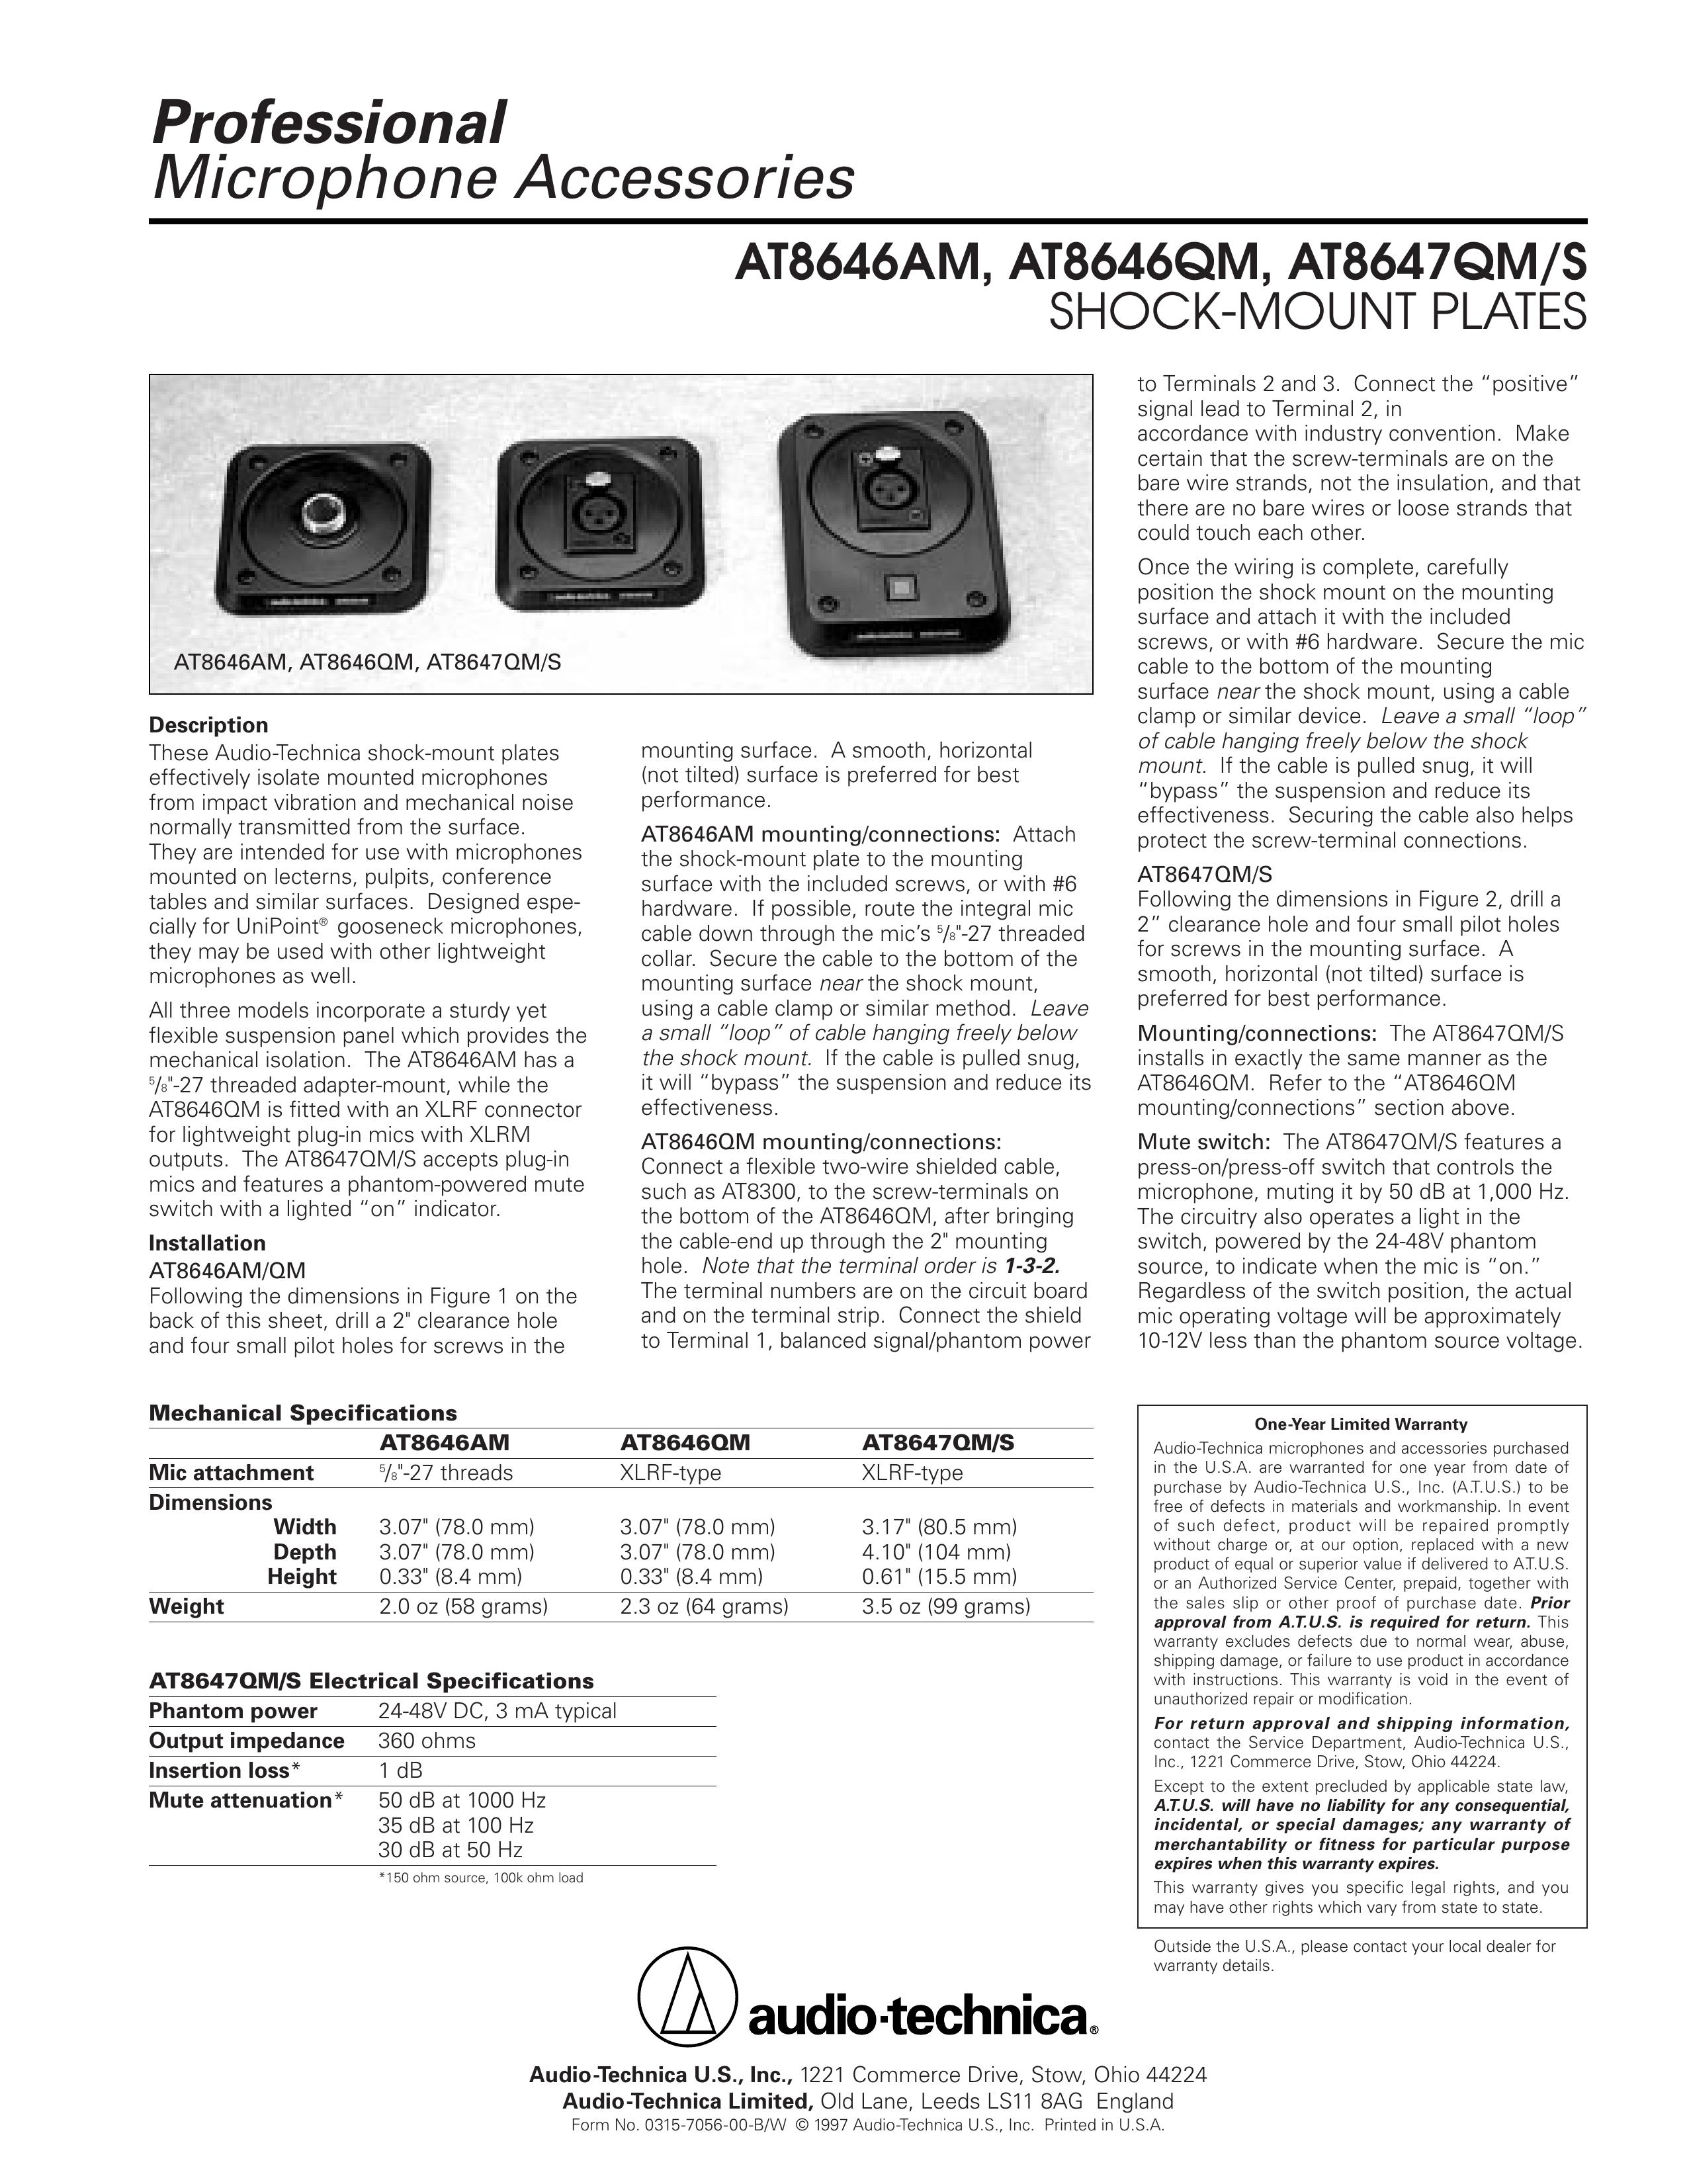 Audio-Technica AT8647QM Microphone User Manual